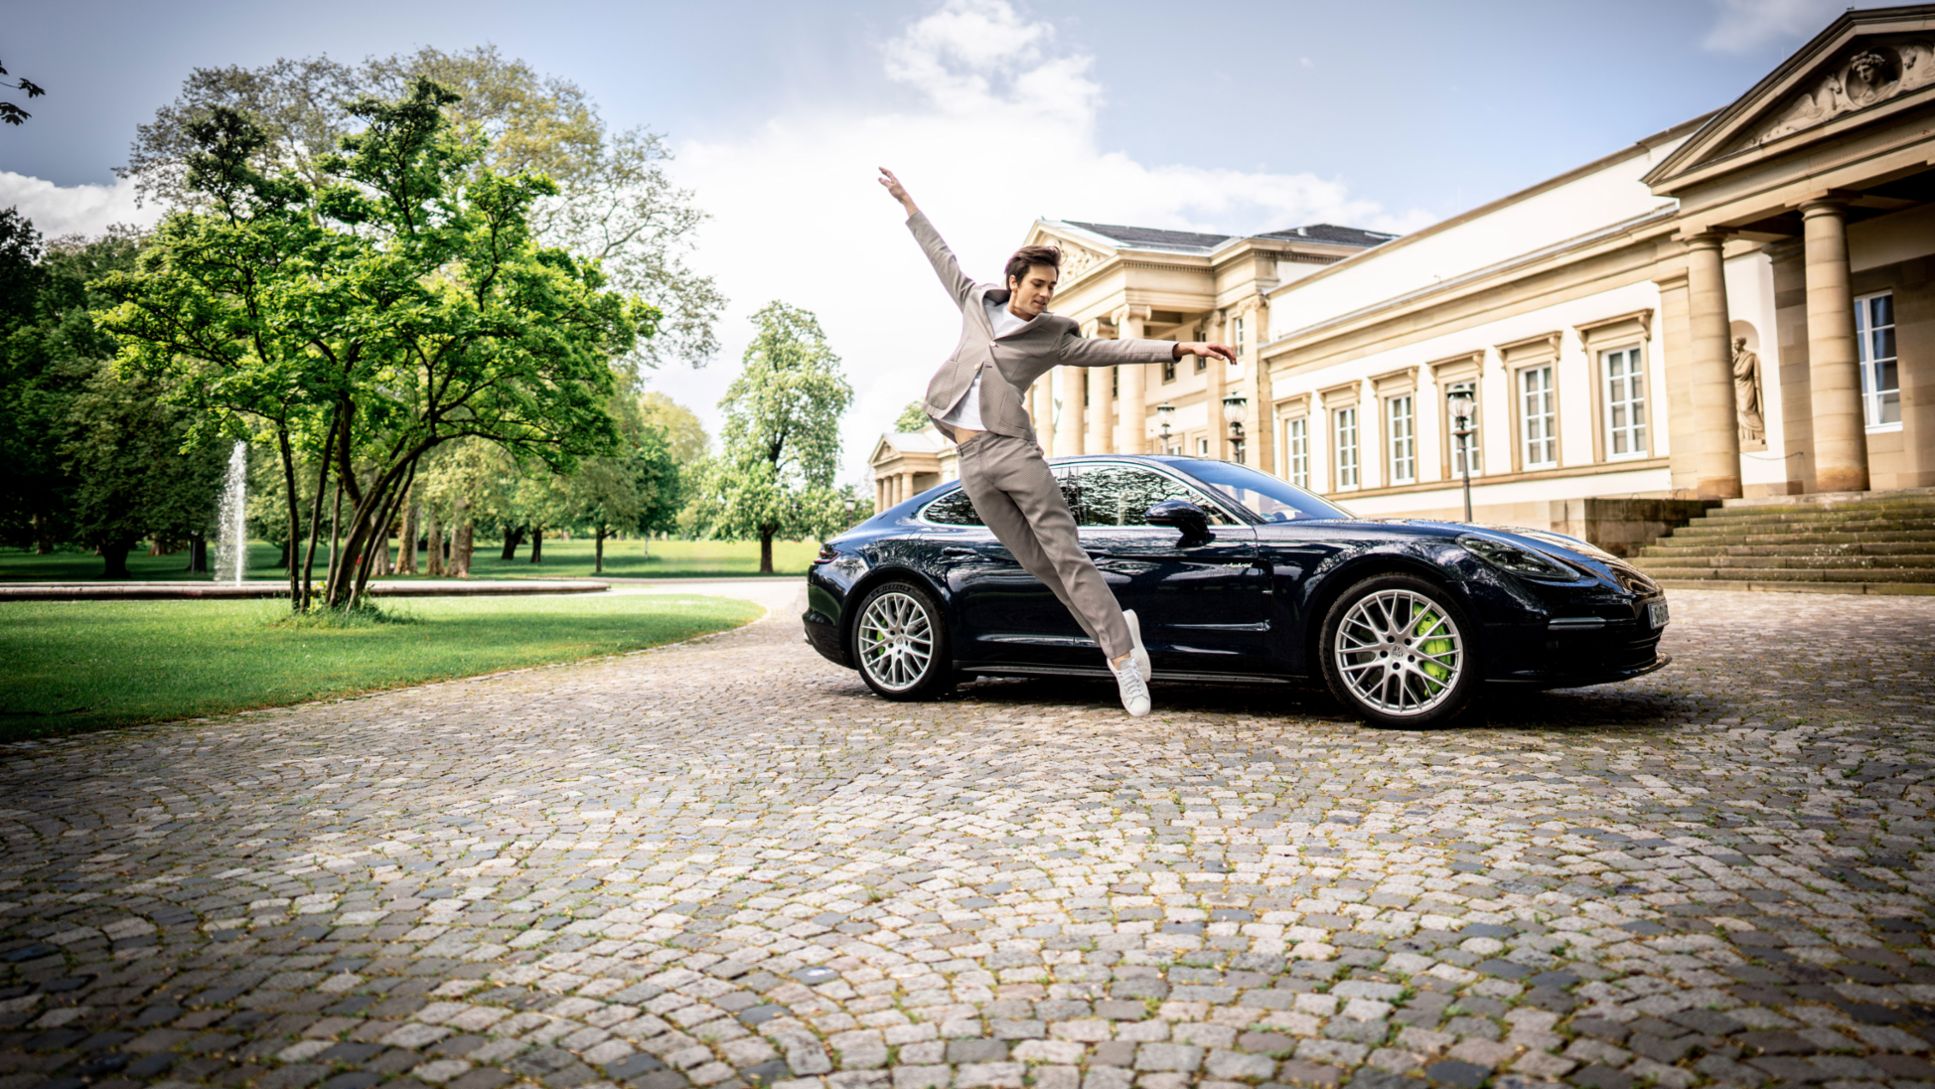 Friedemann Vogel, Balletttänzer, Panamera Turbo S E-Hybrid, Schloss Rosenstein, Stuttgart, 2019, Porsche AG